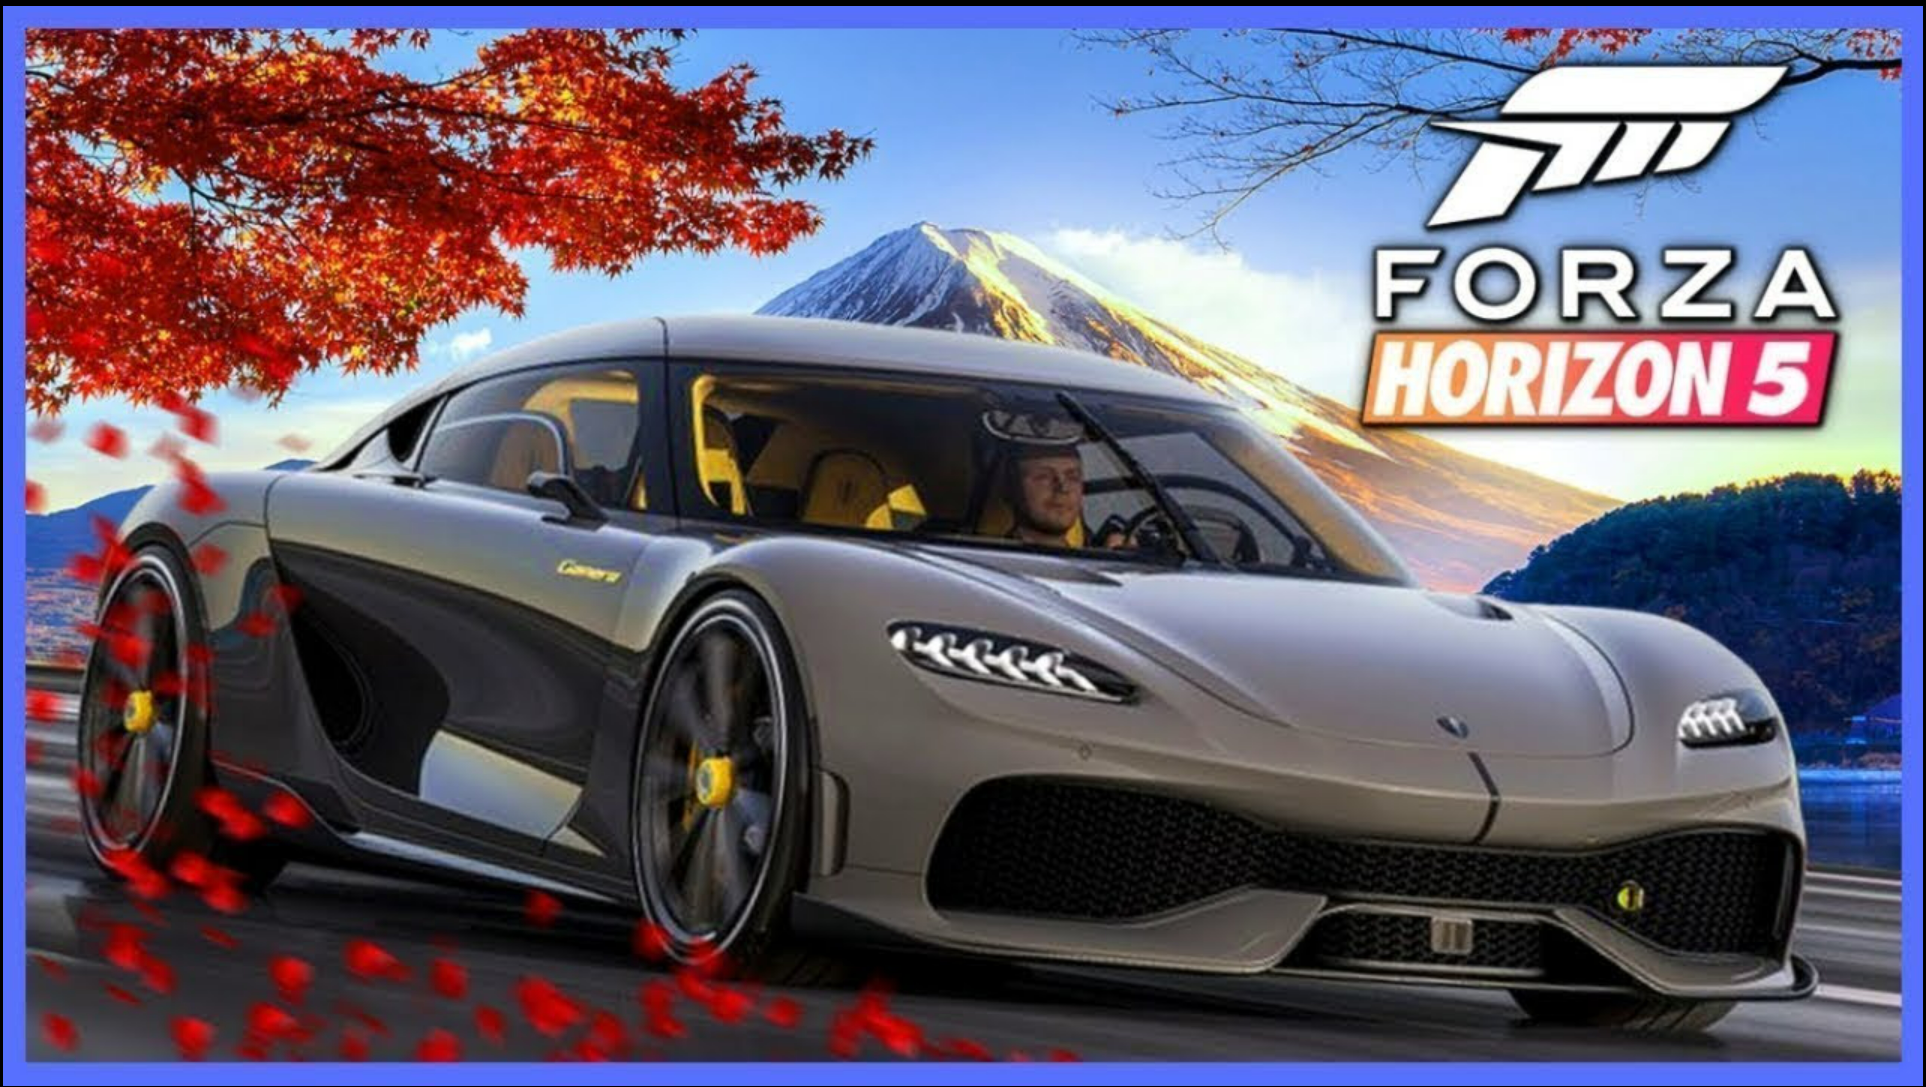 Forza horizon 5 год. Форза хорайзен 5. Forza Horizon 5 Premium Edition. Forza Horizon 5 Xbox one. Форза хорайзон 5 гонки.